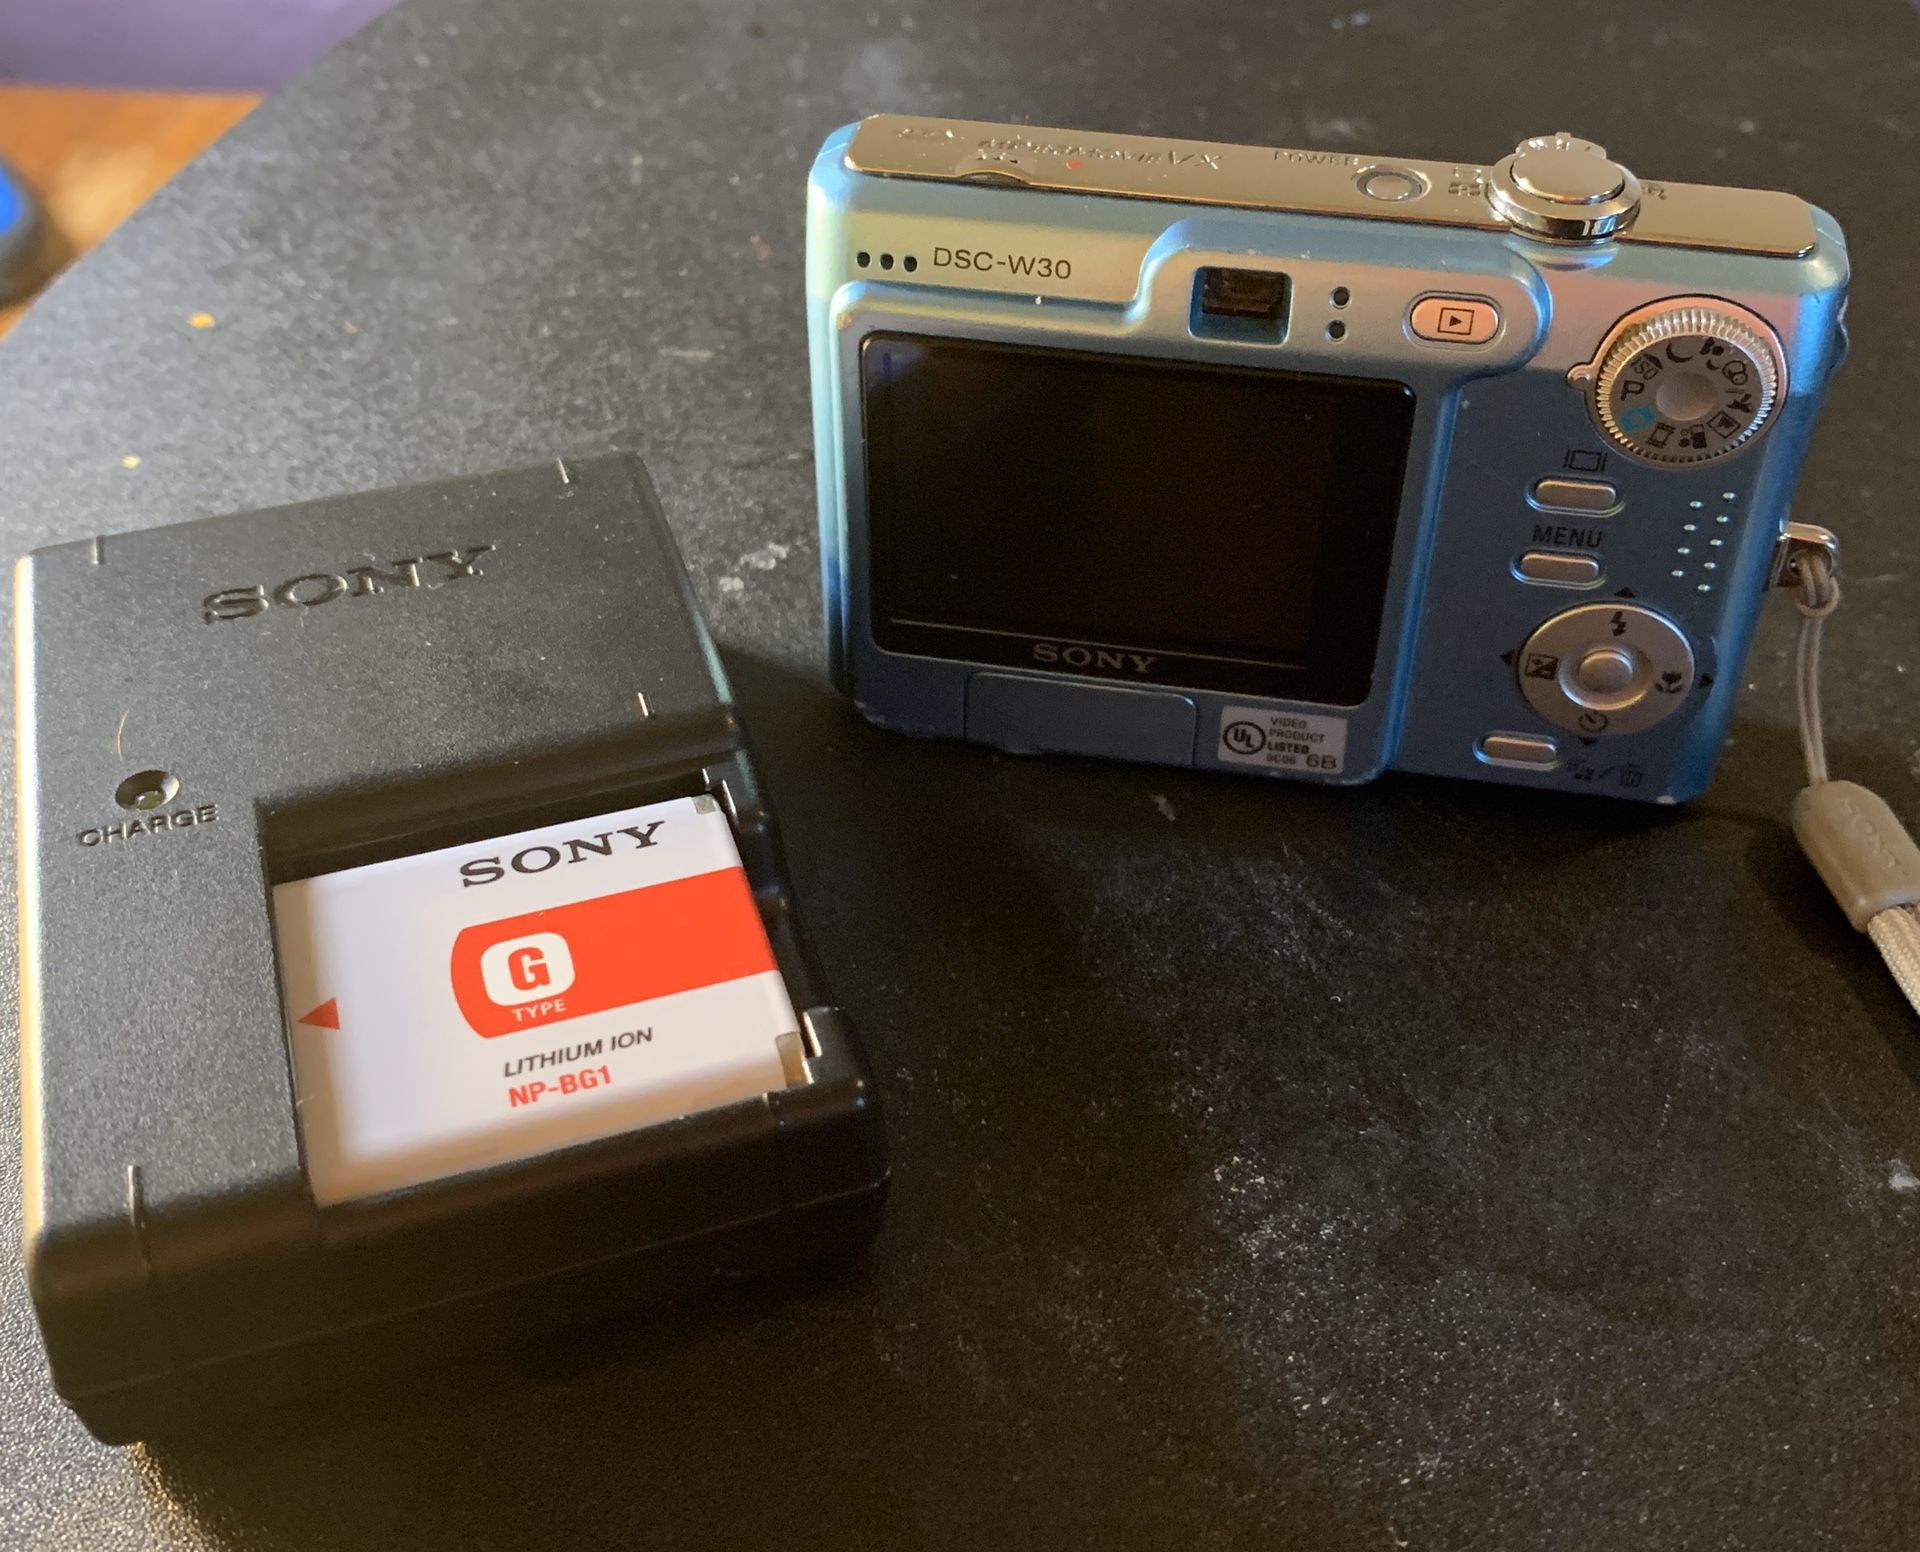 Sony Cyber-shot 6.0MP Digital Camera